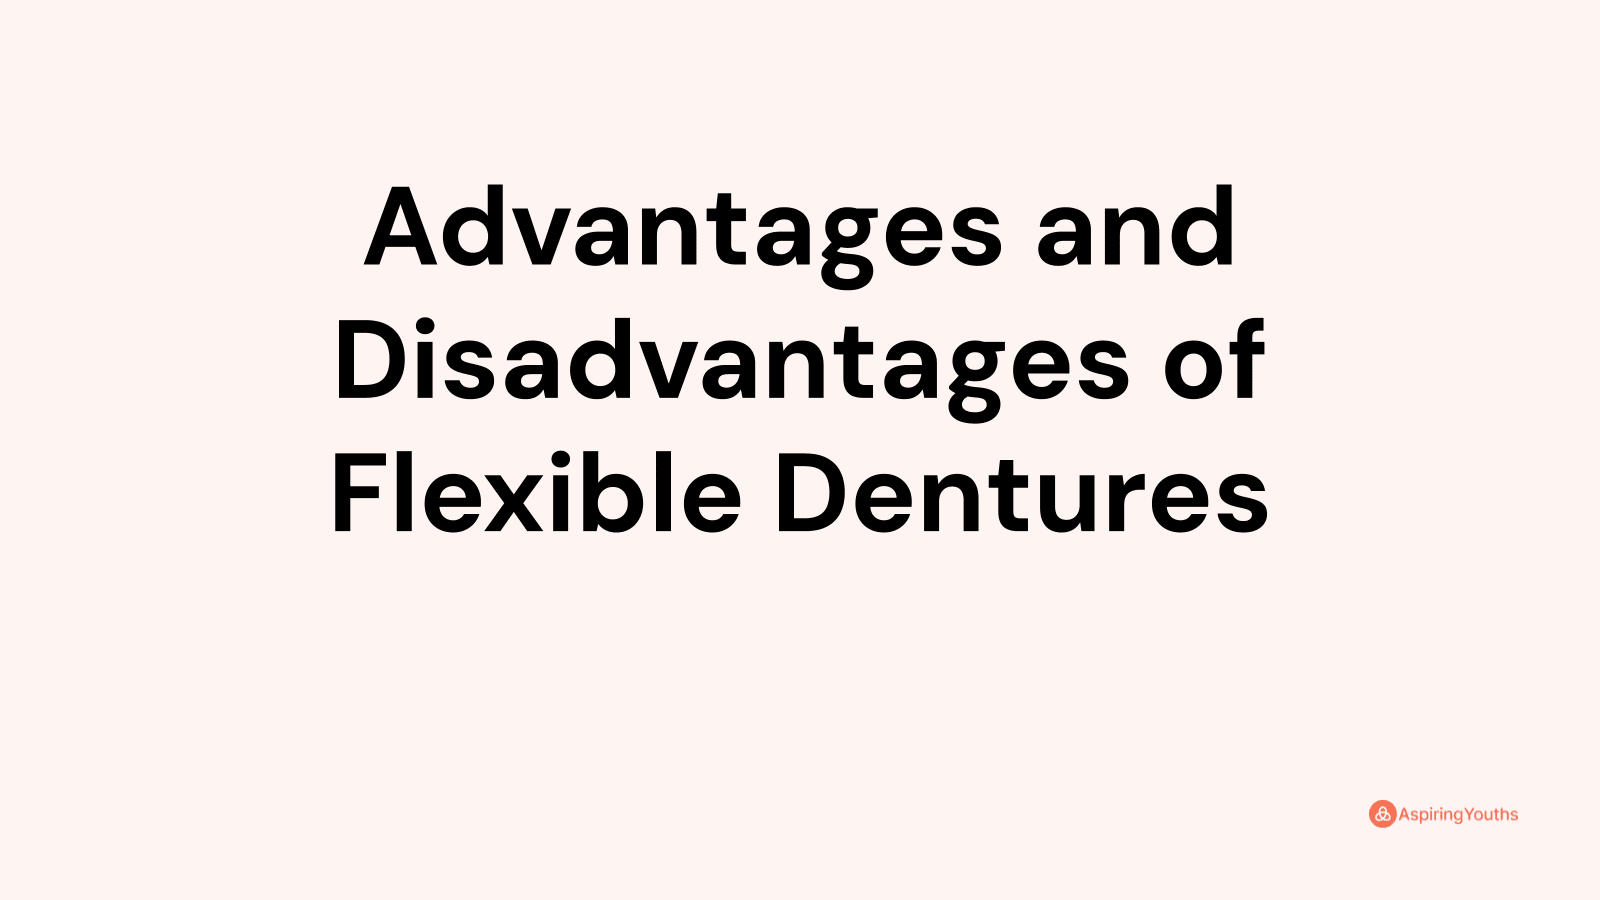 Advantages and disadvantages of Flexible Dentures